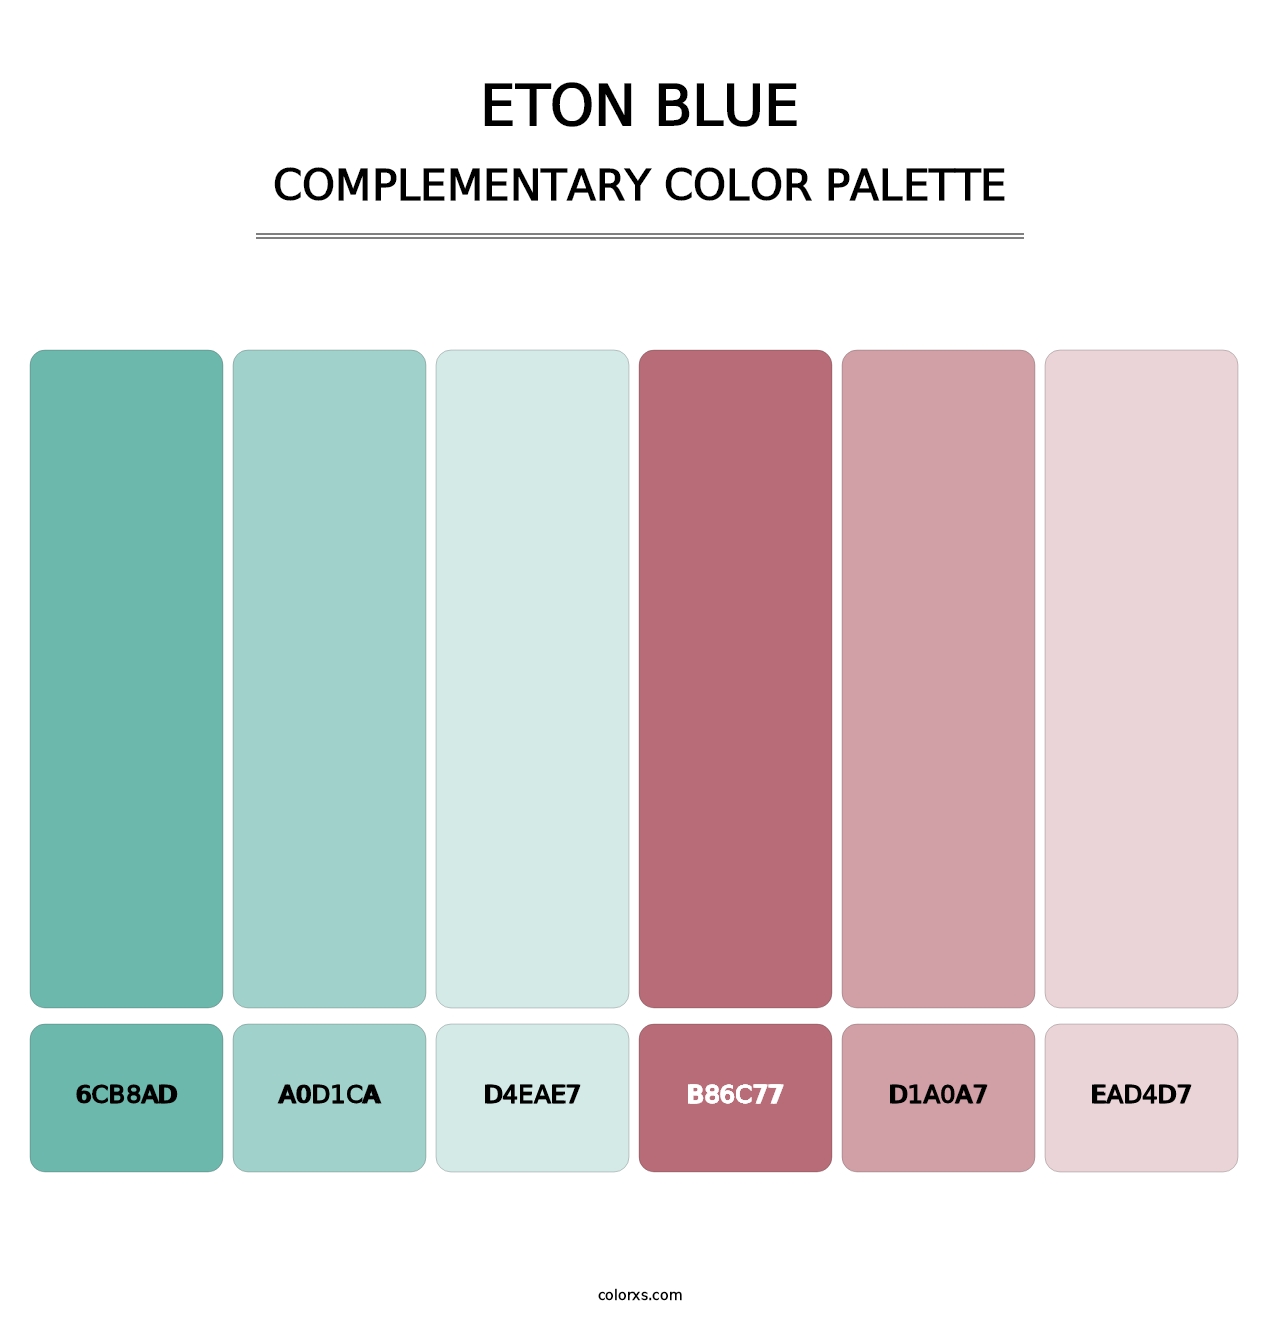 Eton blue - Complementary Color Palette